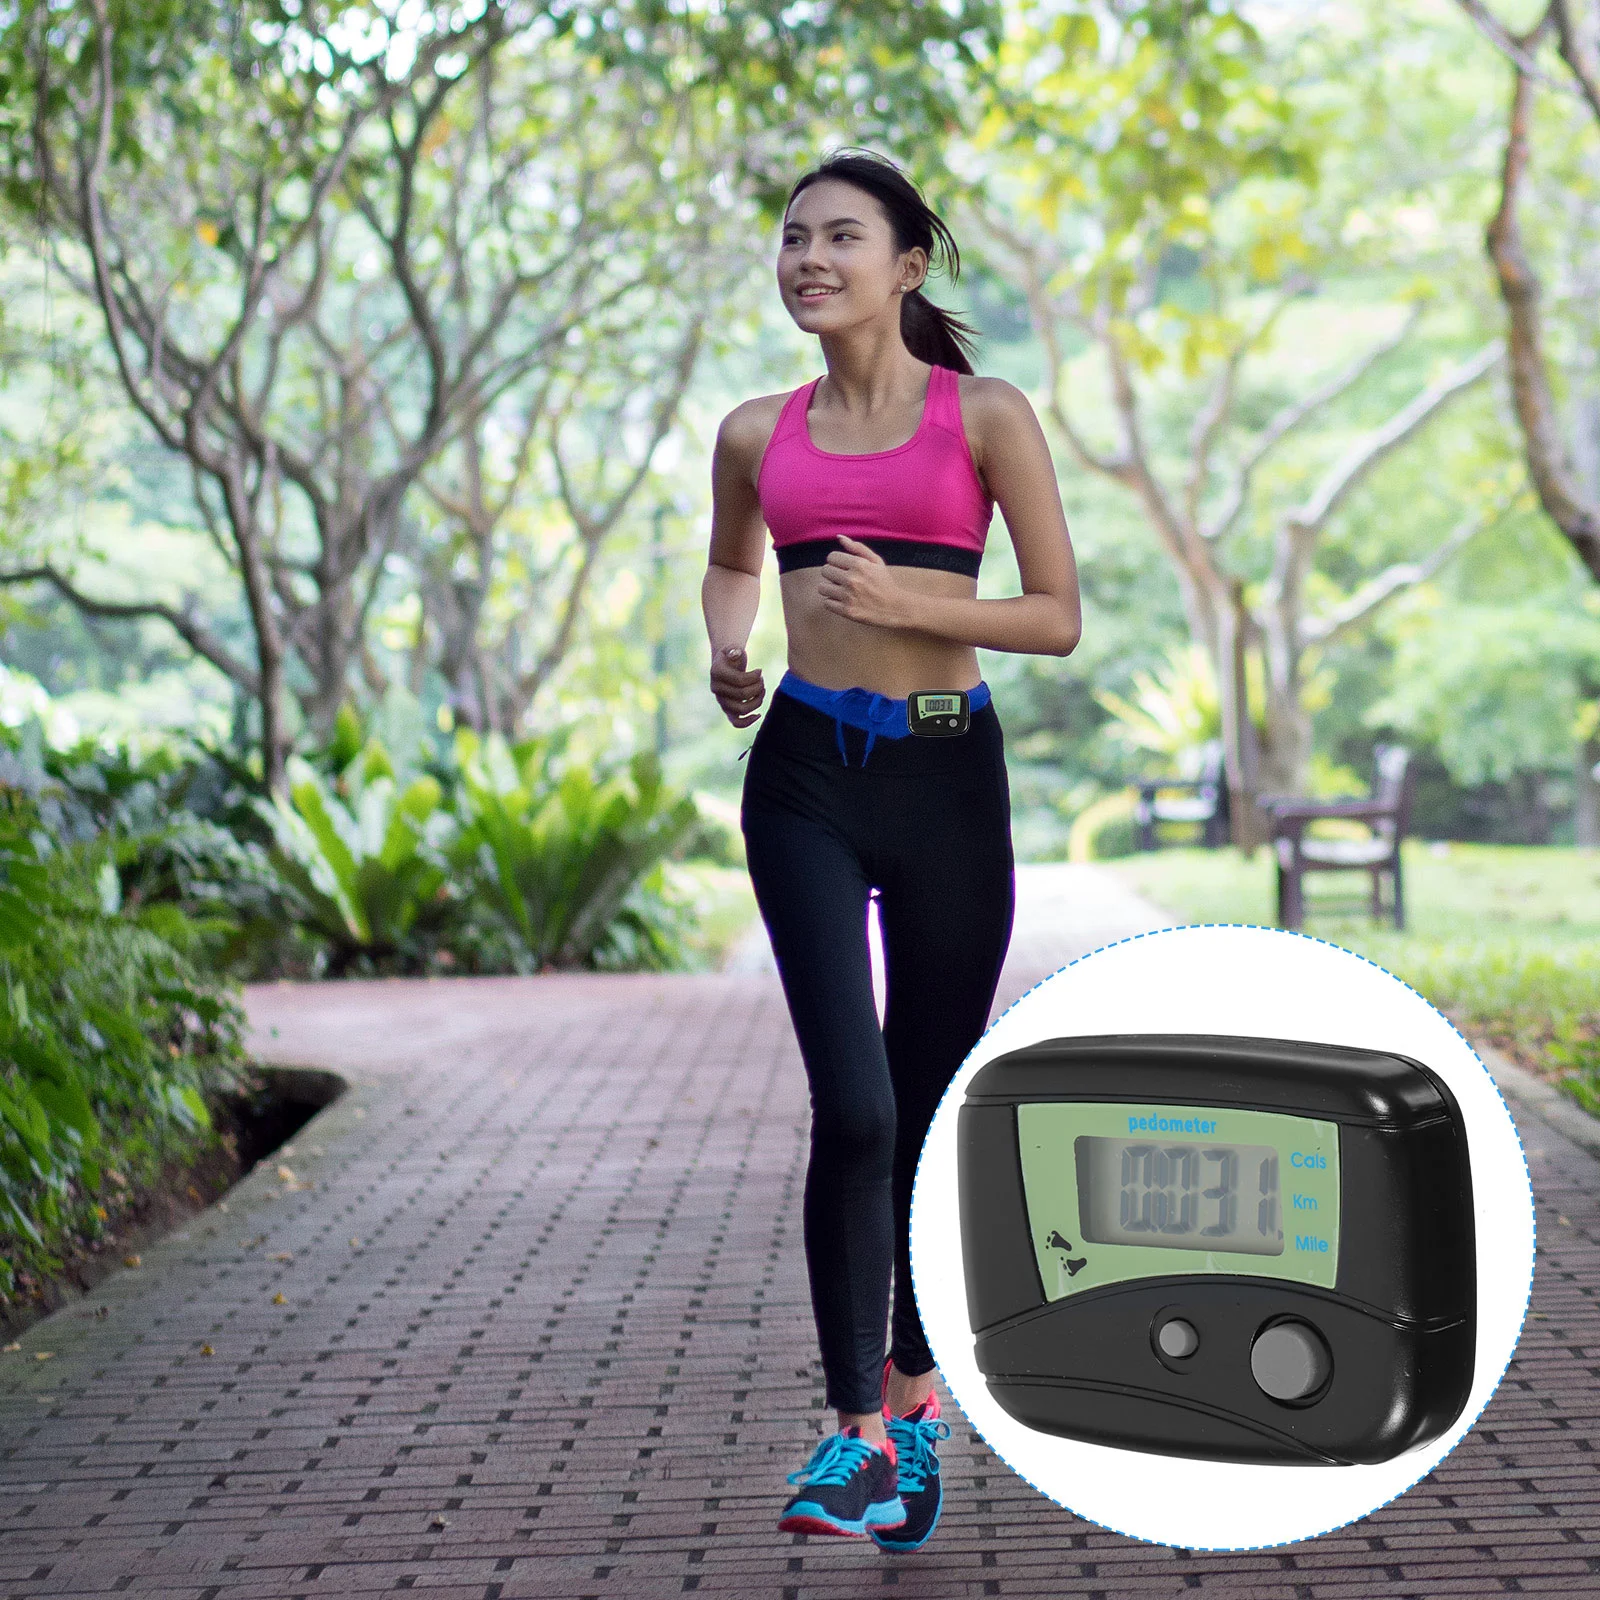 

Portable Multi-functional LCD Display Digital Pedometer Steps Walking Distance Calorie Counter (Black)